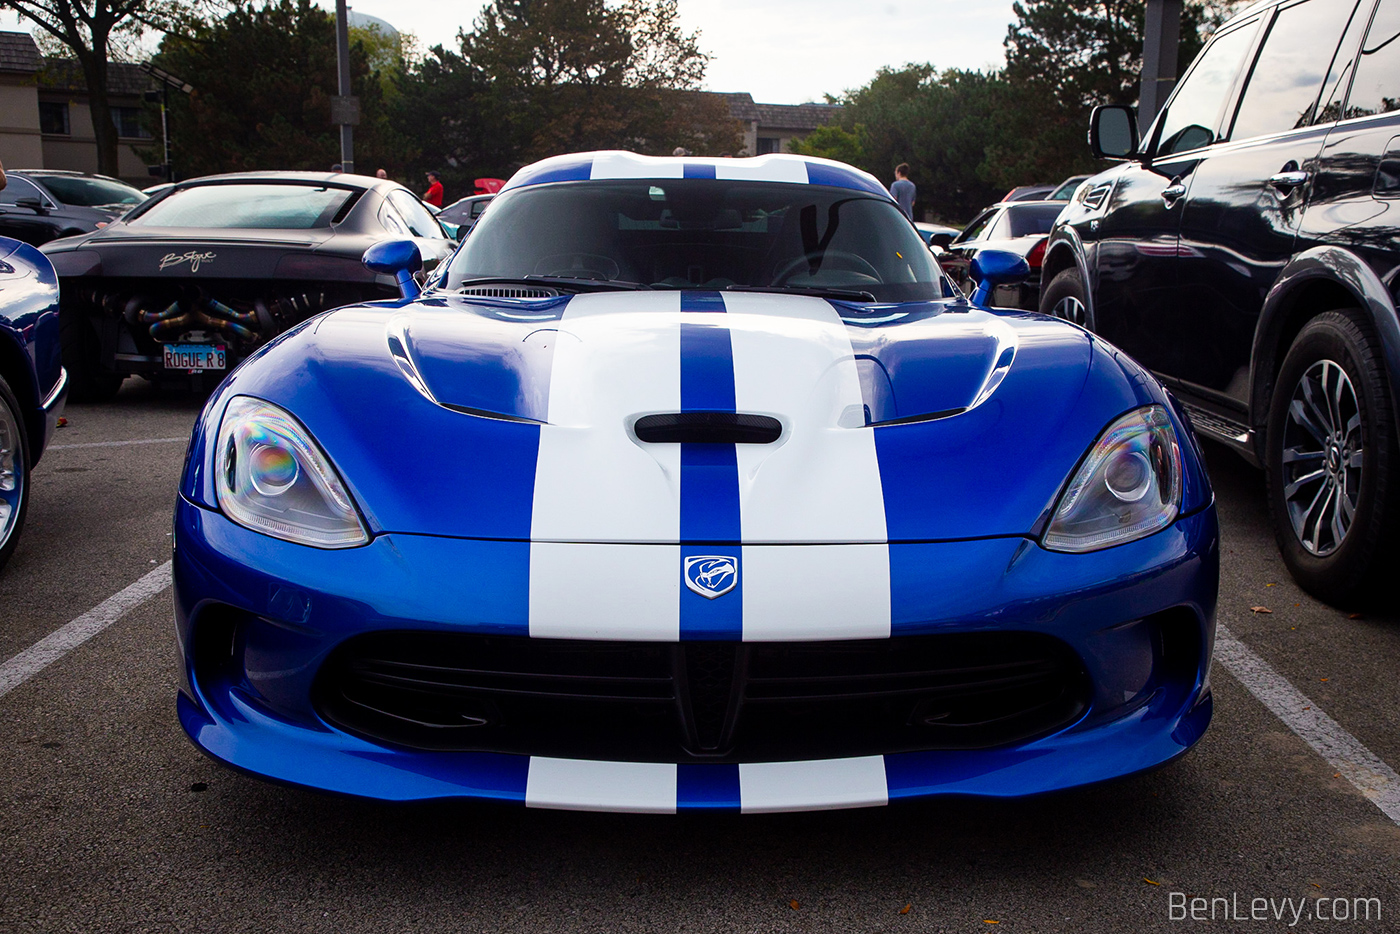 Blue Dodge Viper with White Stripes